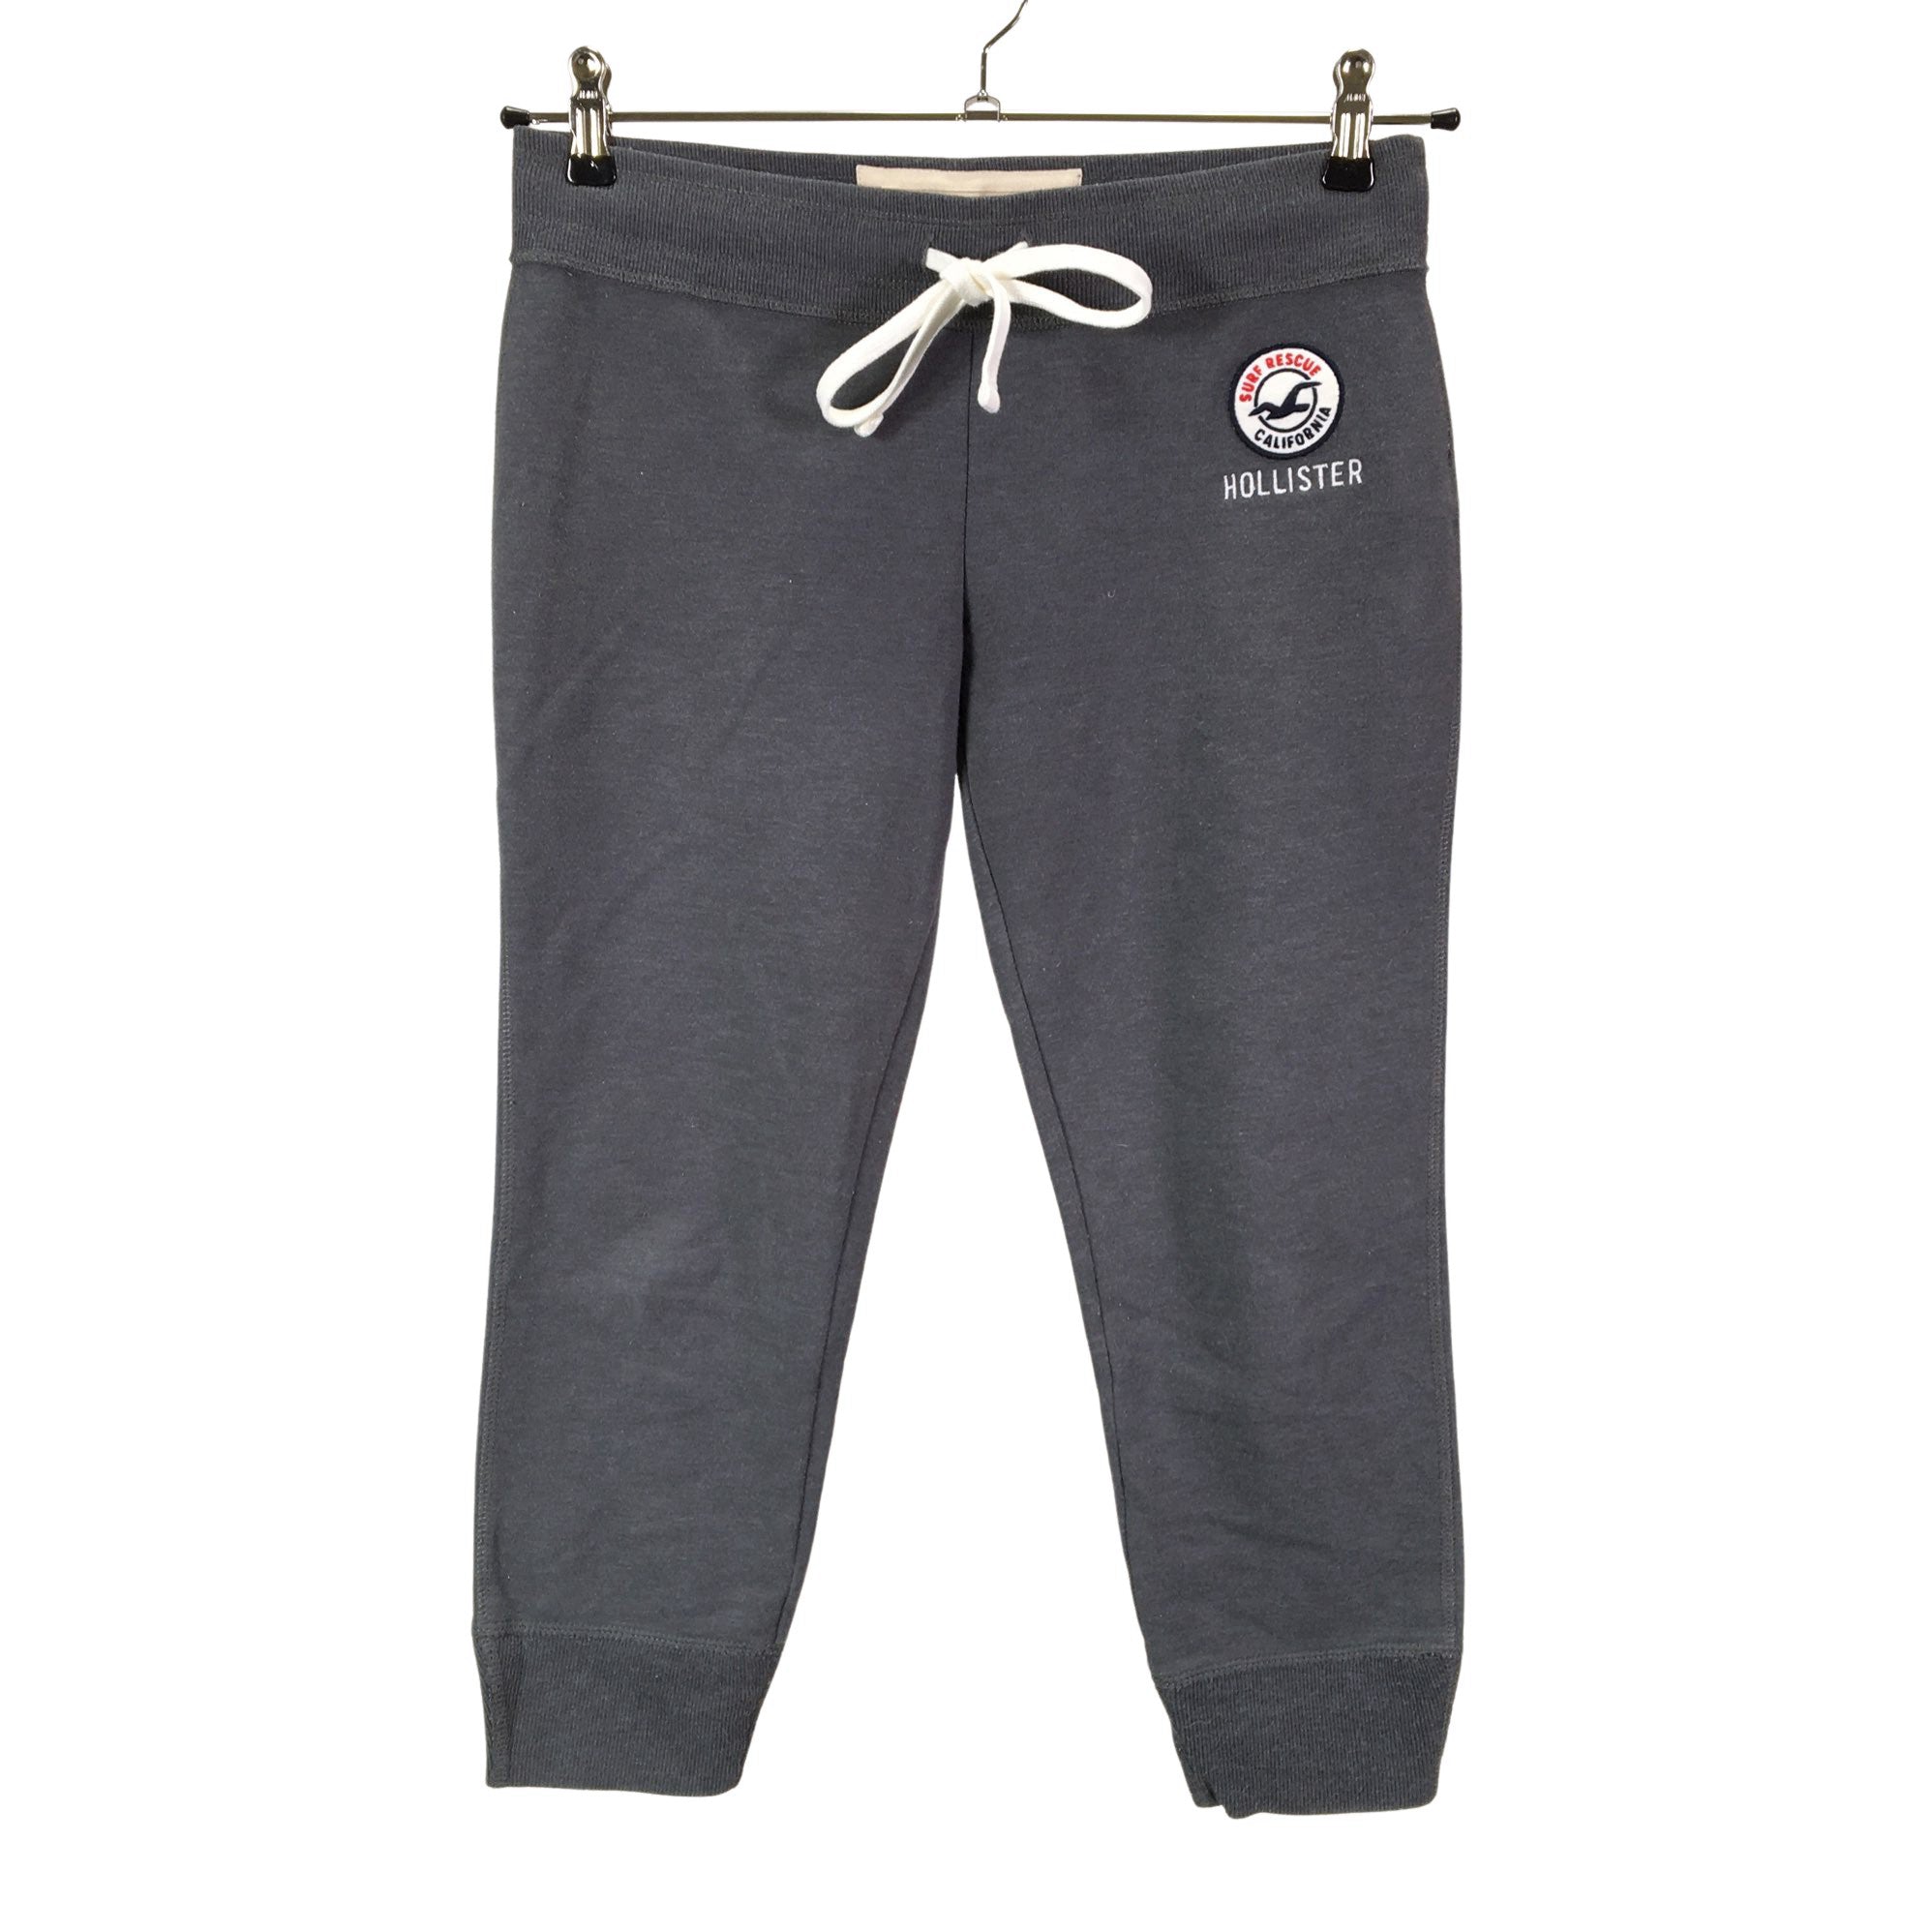 Women's Hollister Capri sweatpants, size 38 (Grey)